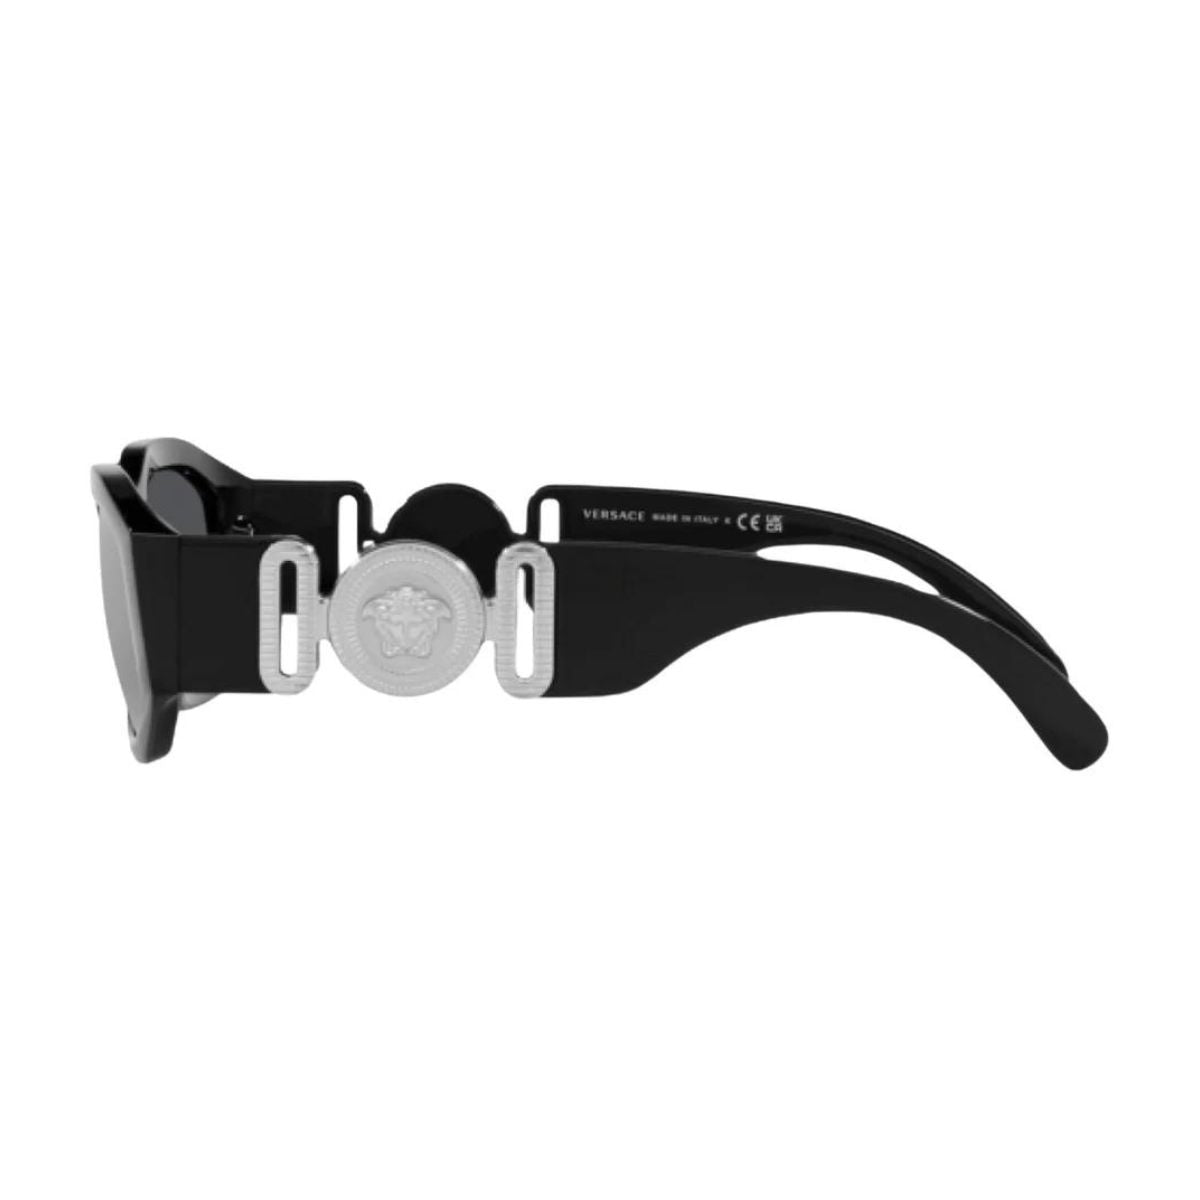 "Stylish Versace 4361 5422/87 UV Protecction Sunglasses For Unisex At Optorium"